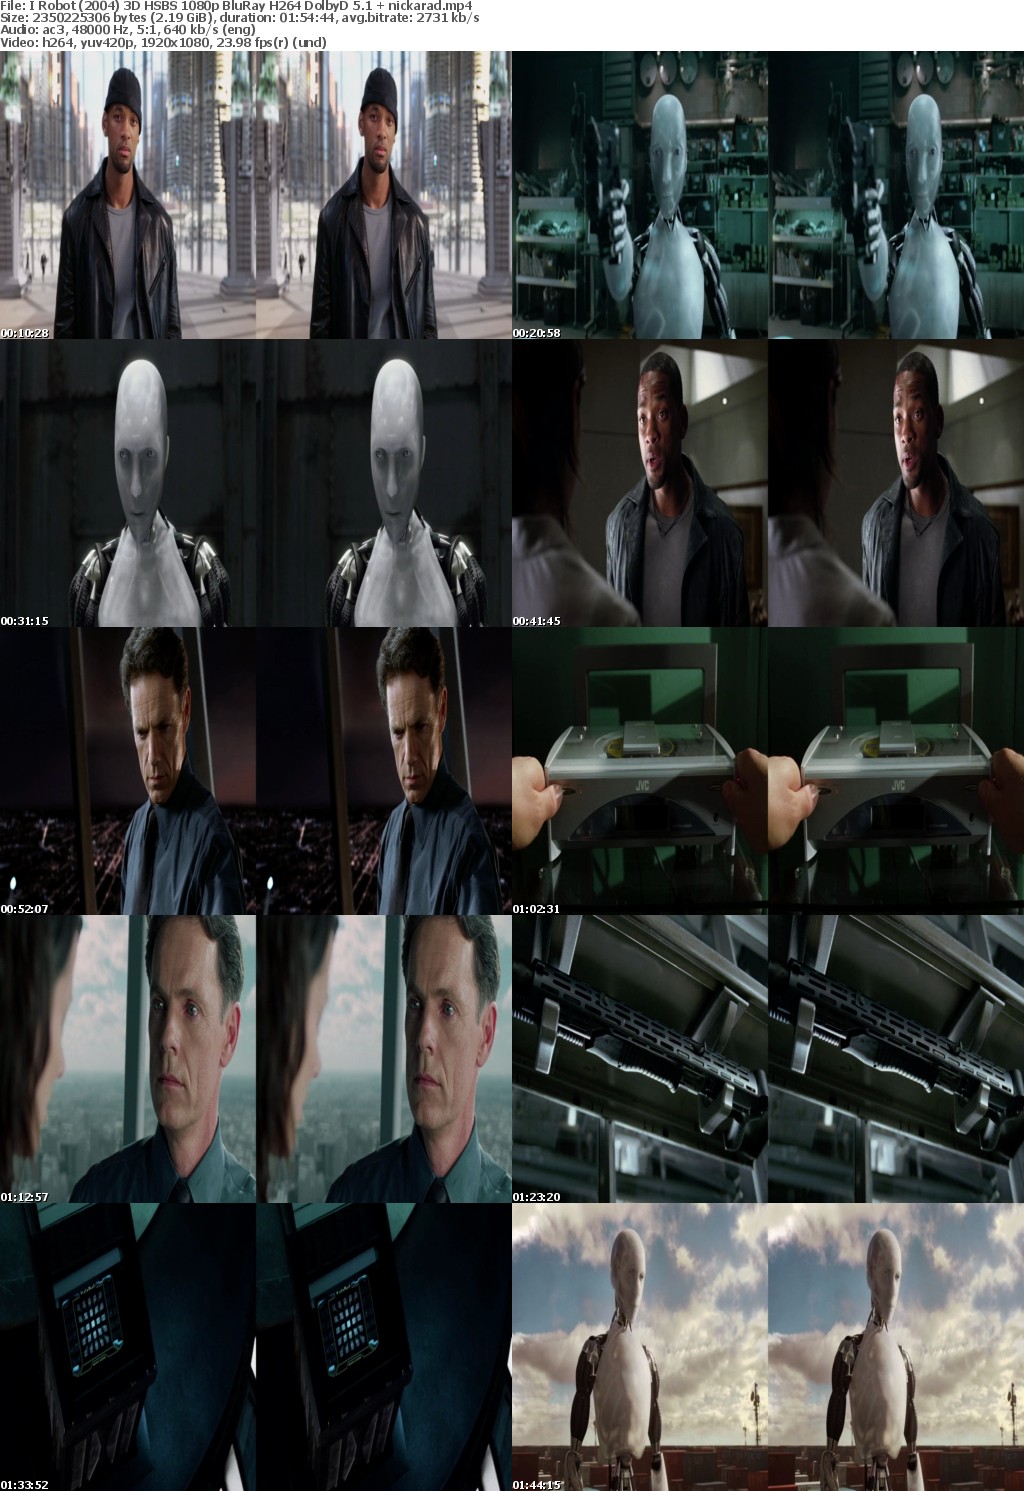 I Robot (2004) 3D HSBS 1080p BluRay H264 DolbyD 5 1 nickarad